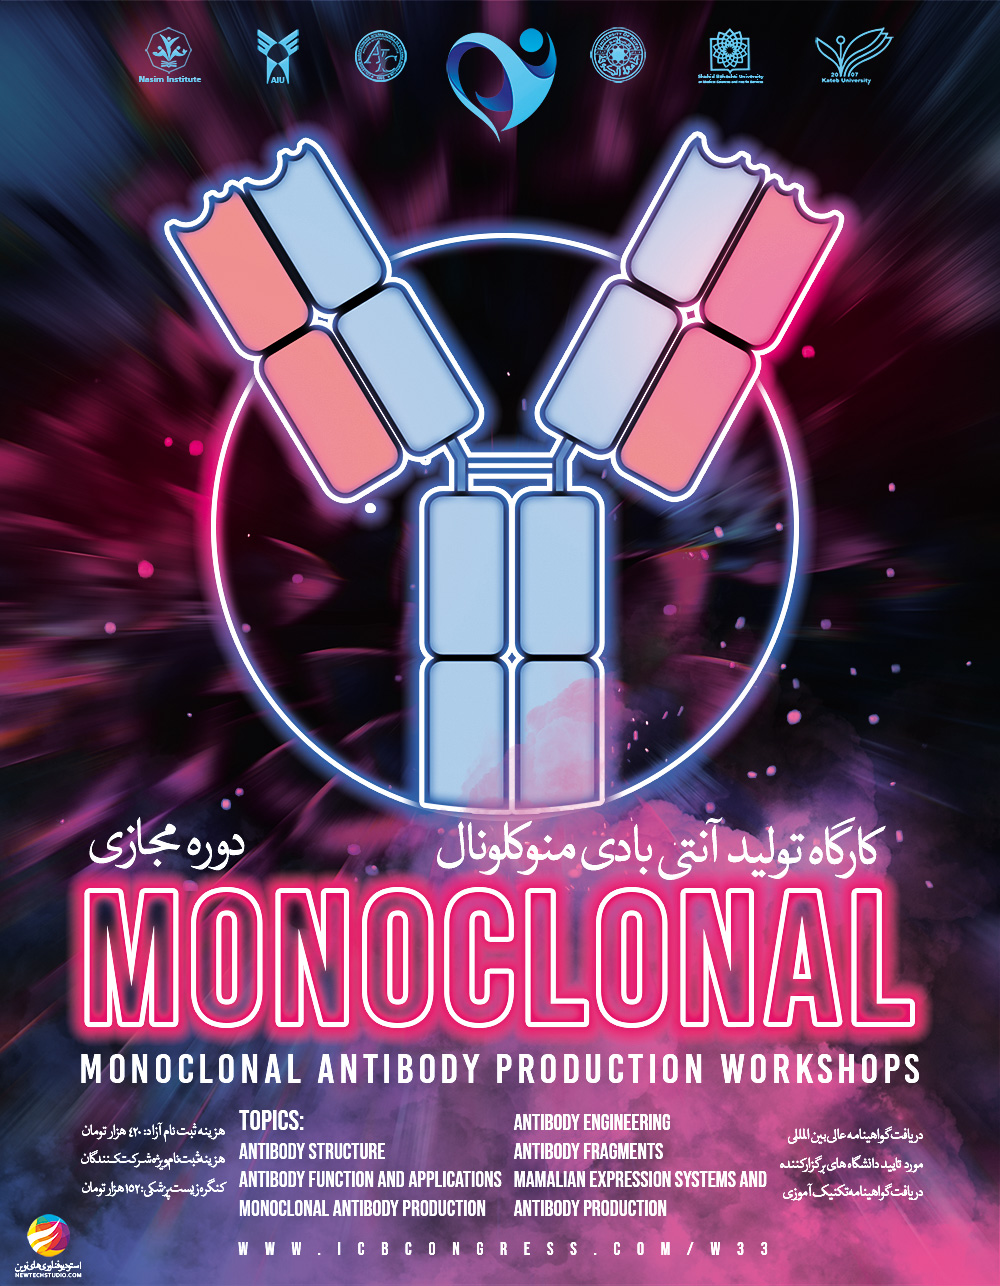 Monoclonal Antibody Production Workshops